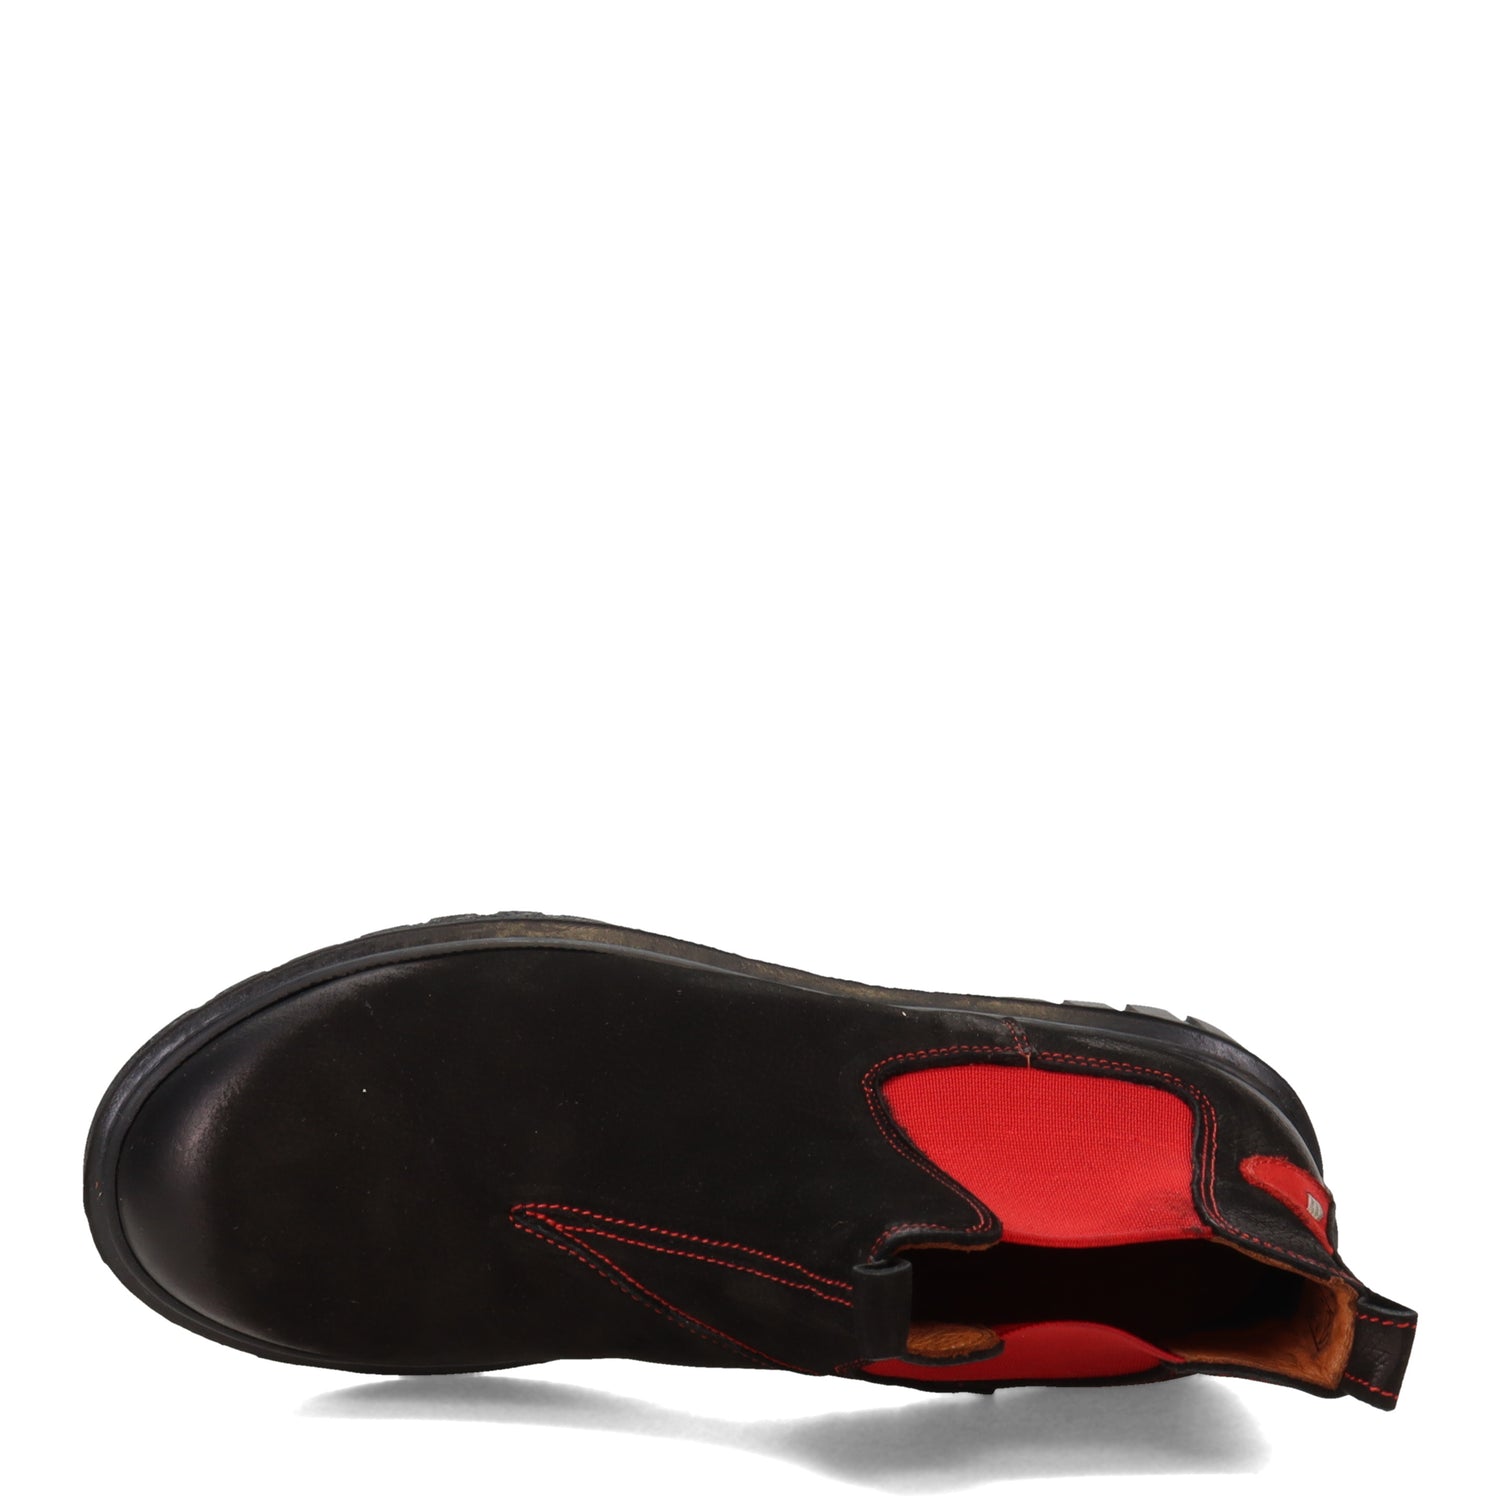 Peltz Shoes  Women's Biza Jasper Boot BLACK RED 6027004